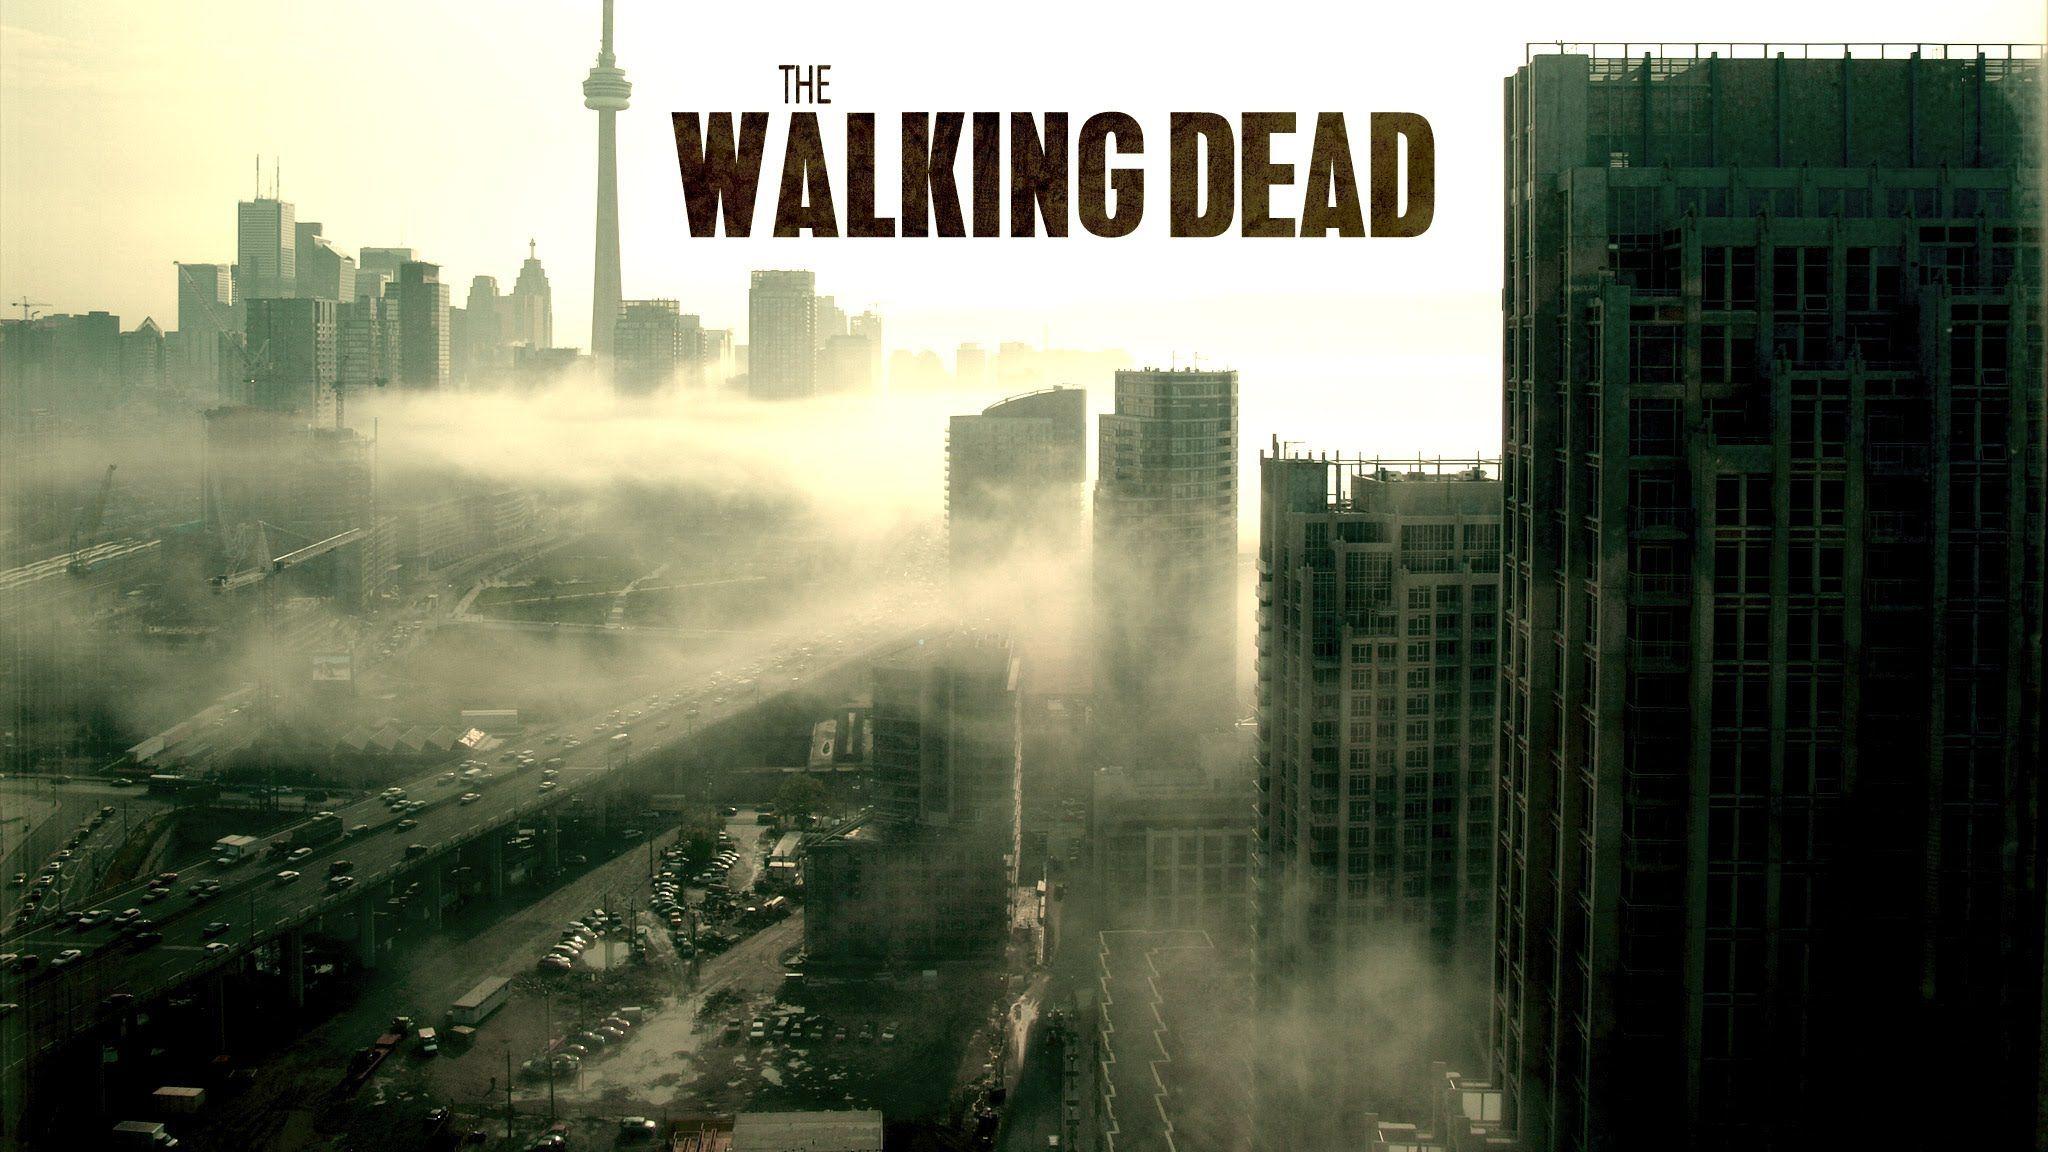 Image for the walking dead season 5 poster download. Projektek